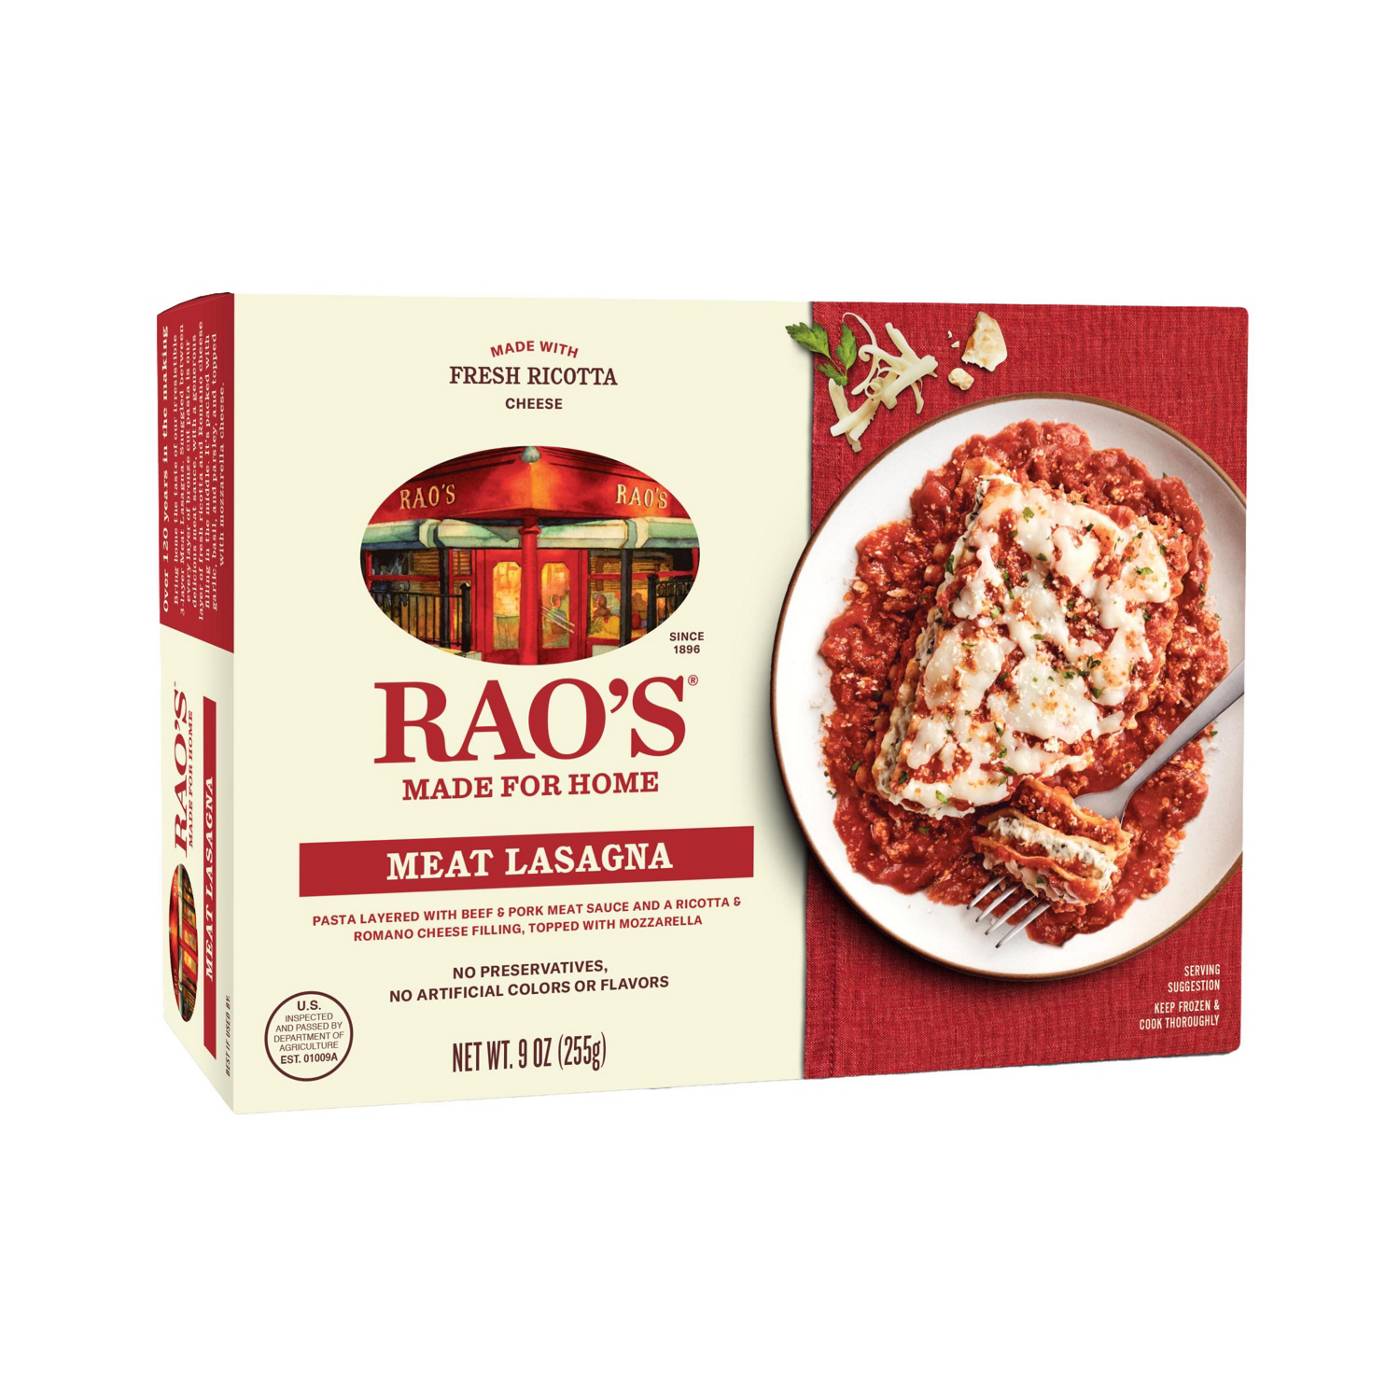 Rao's Meat Lasagna Frozen Meal; image 1 of 3